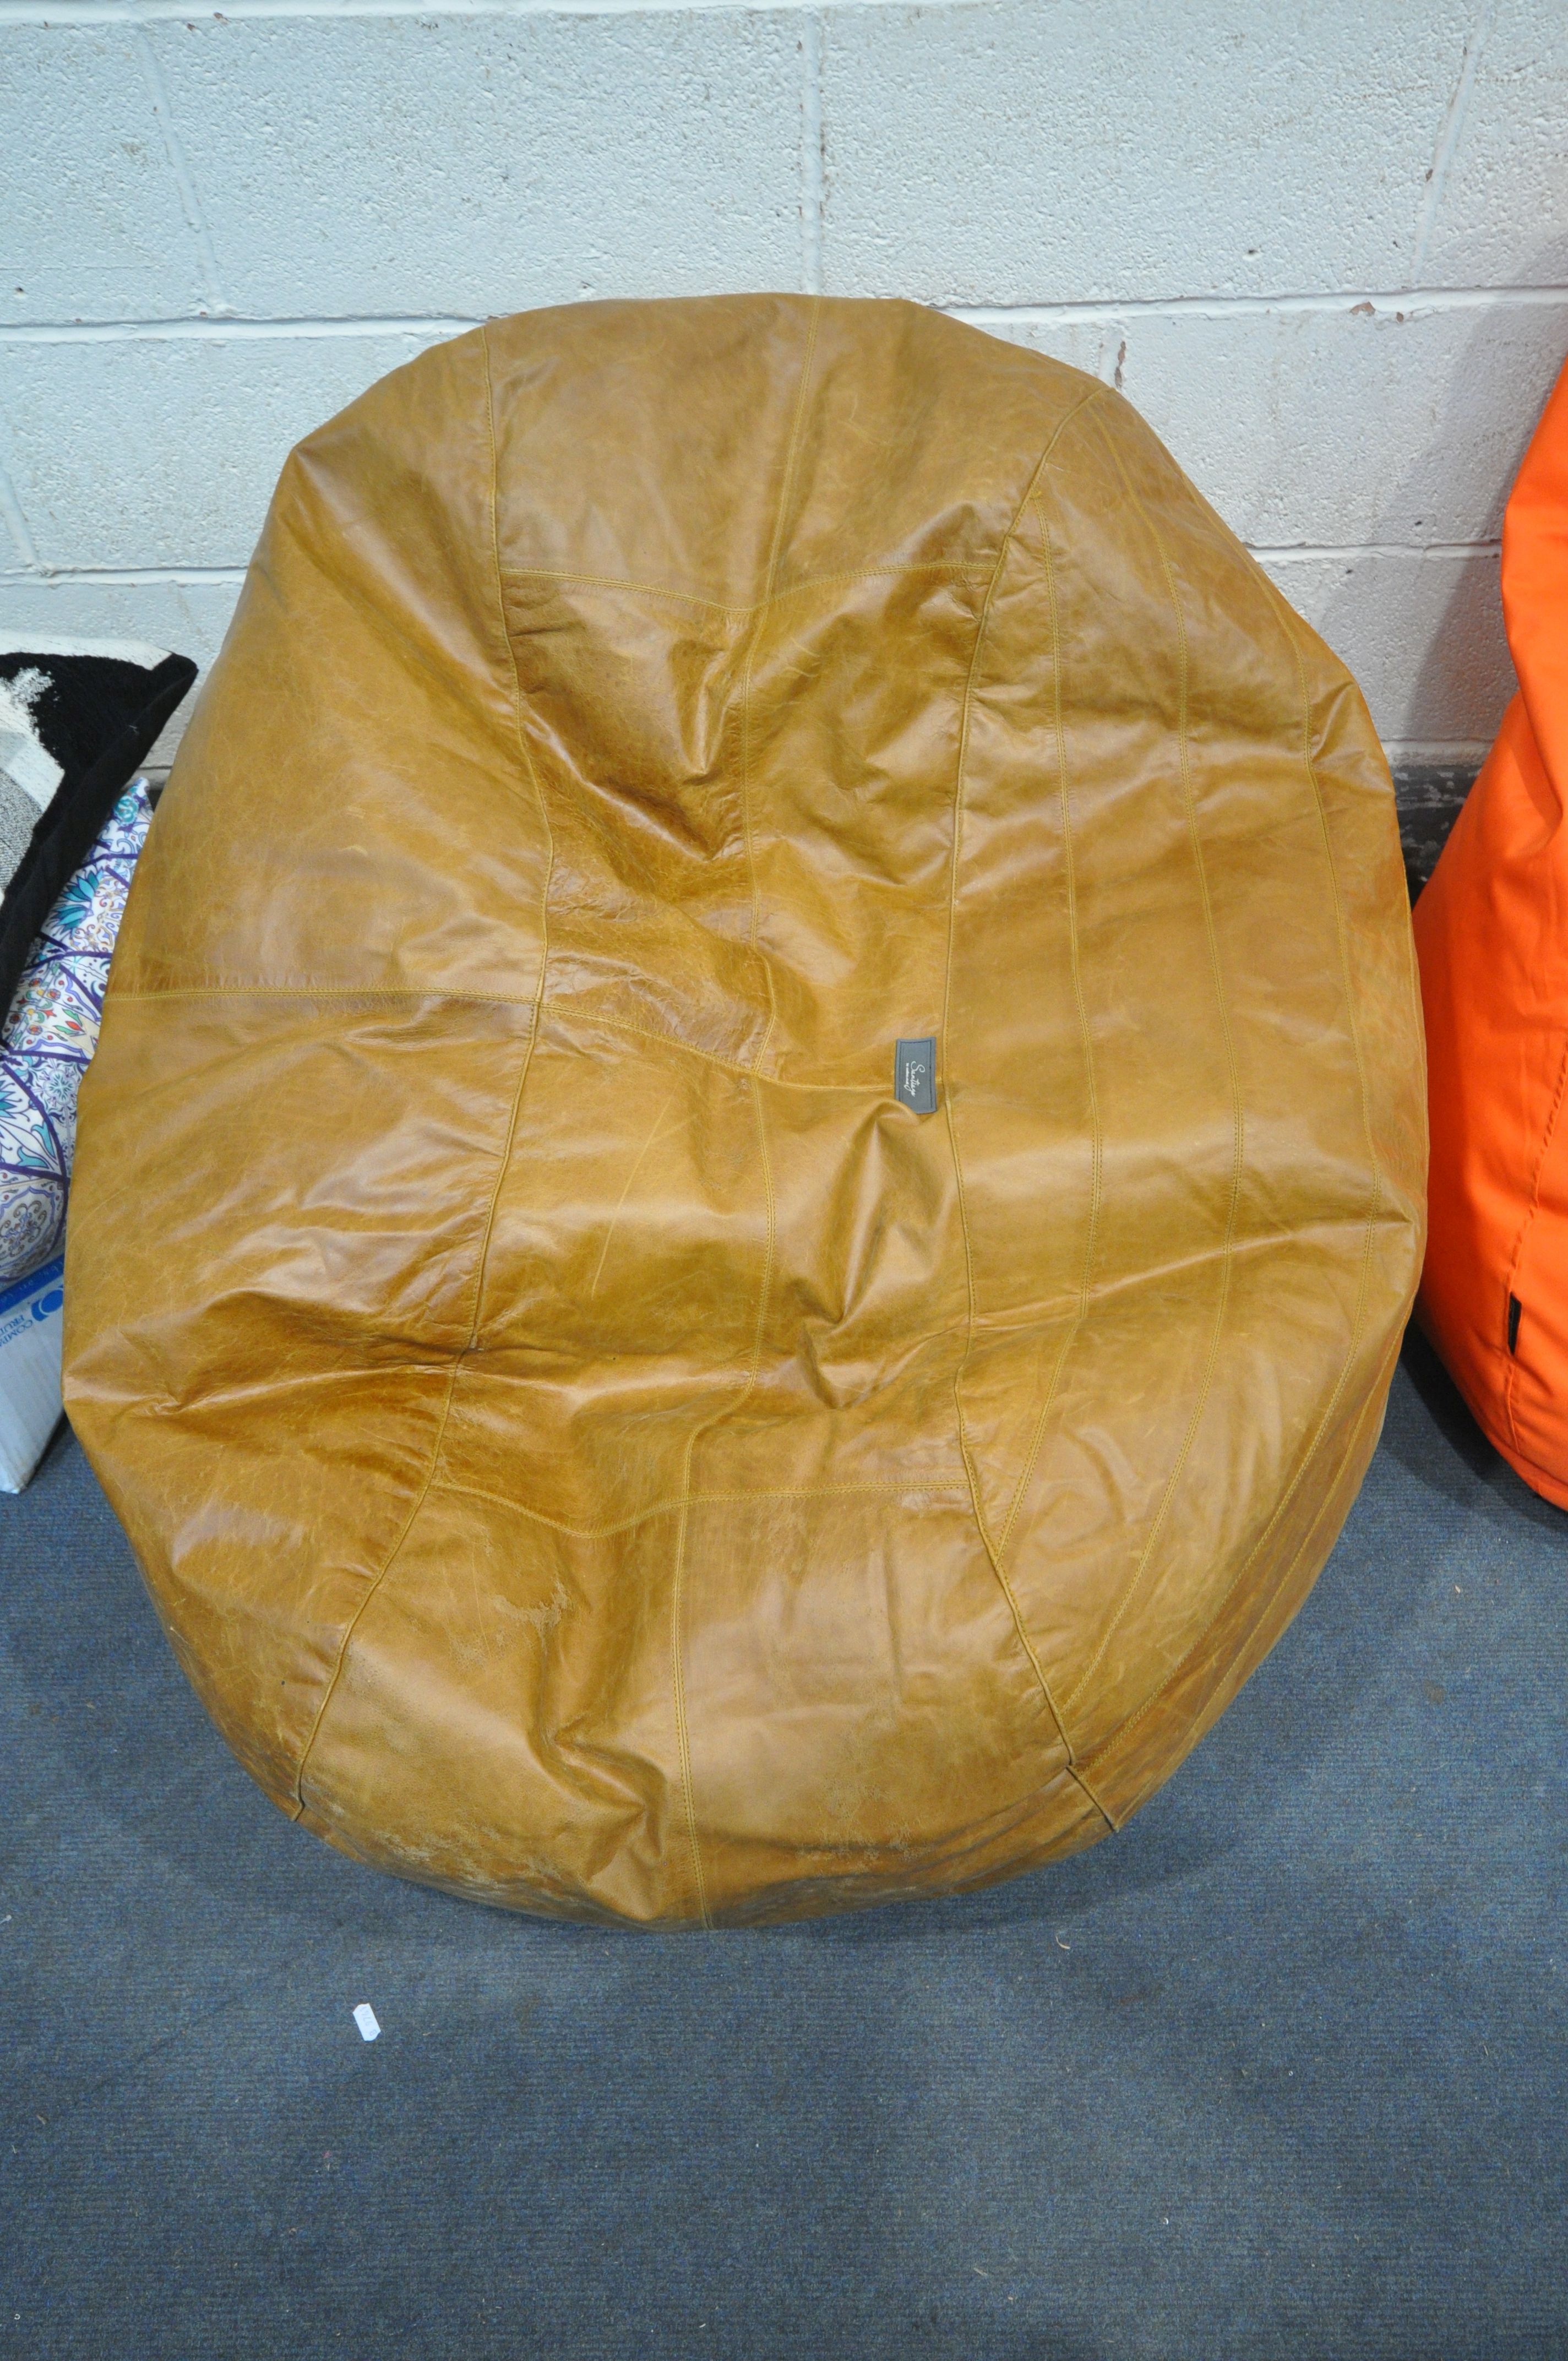 A COZIBAG.CO.UK LEATHER BEAN BAG, a Loft25 fluorescent orange bean bag, and a box of various - Image 2 of 4